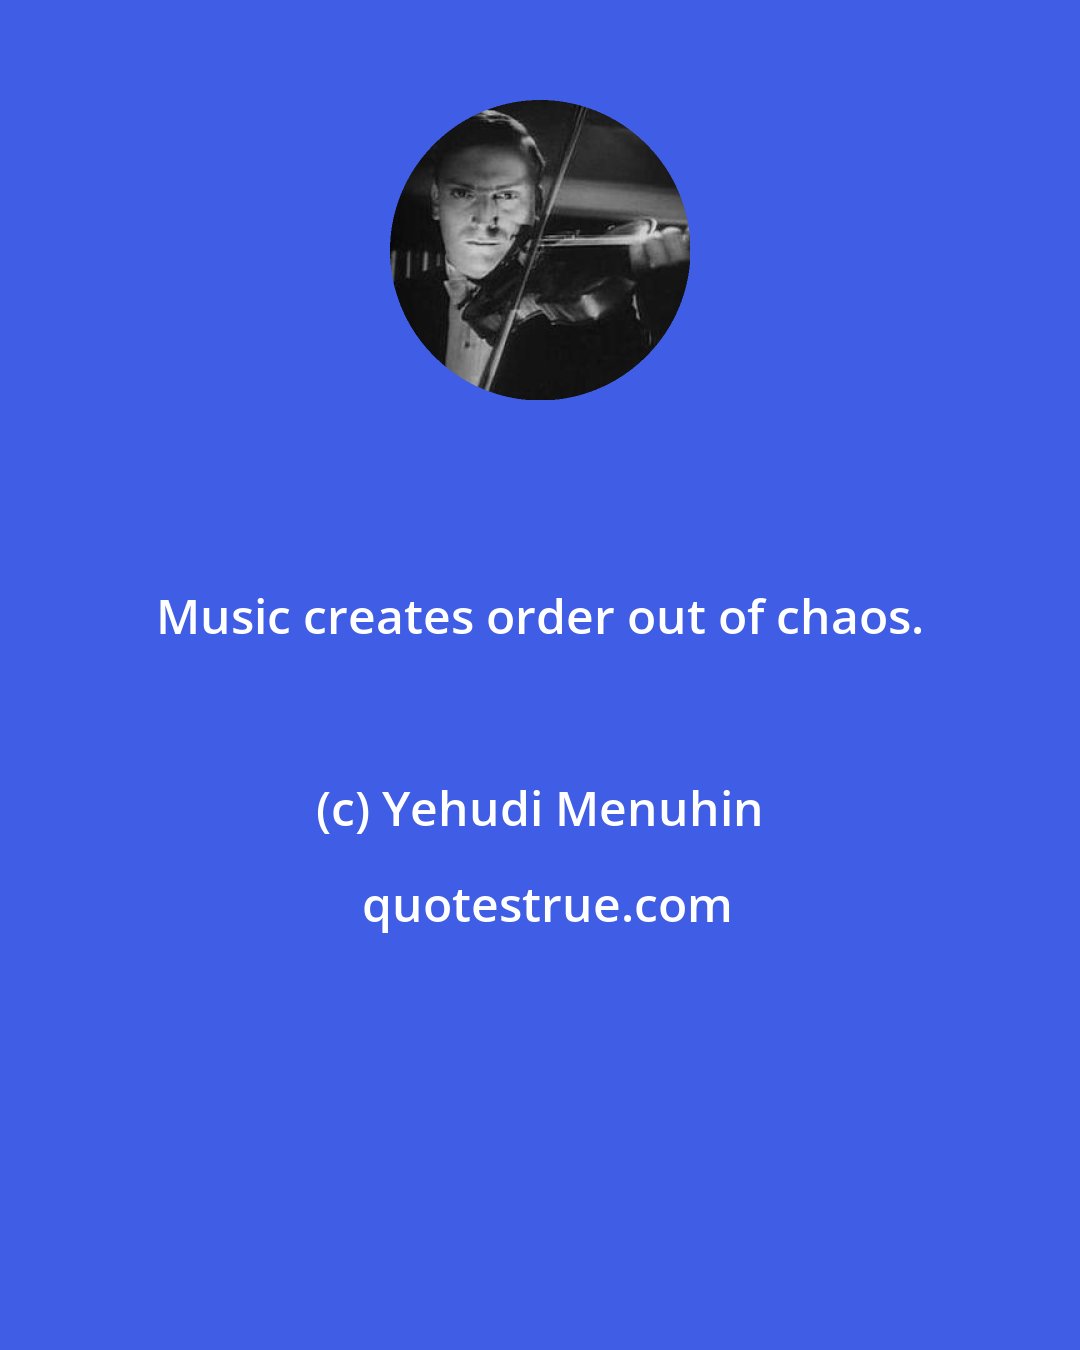 Yehudi Menuhin: Music creates order out of chaos.